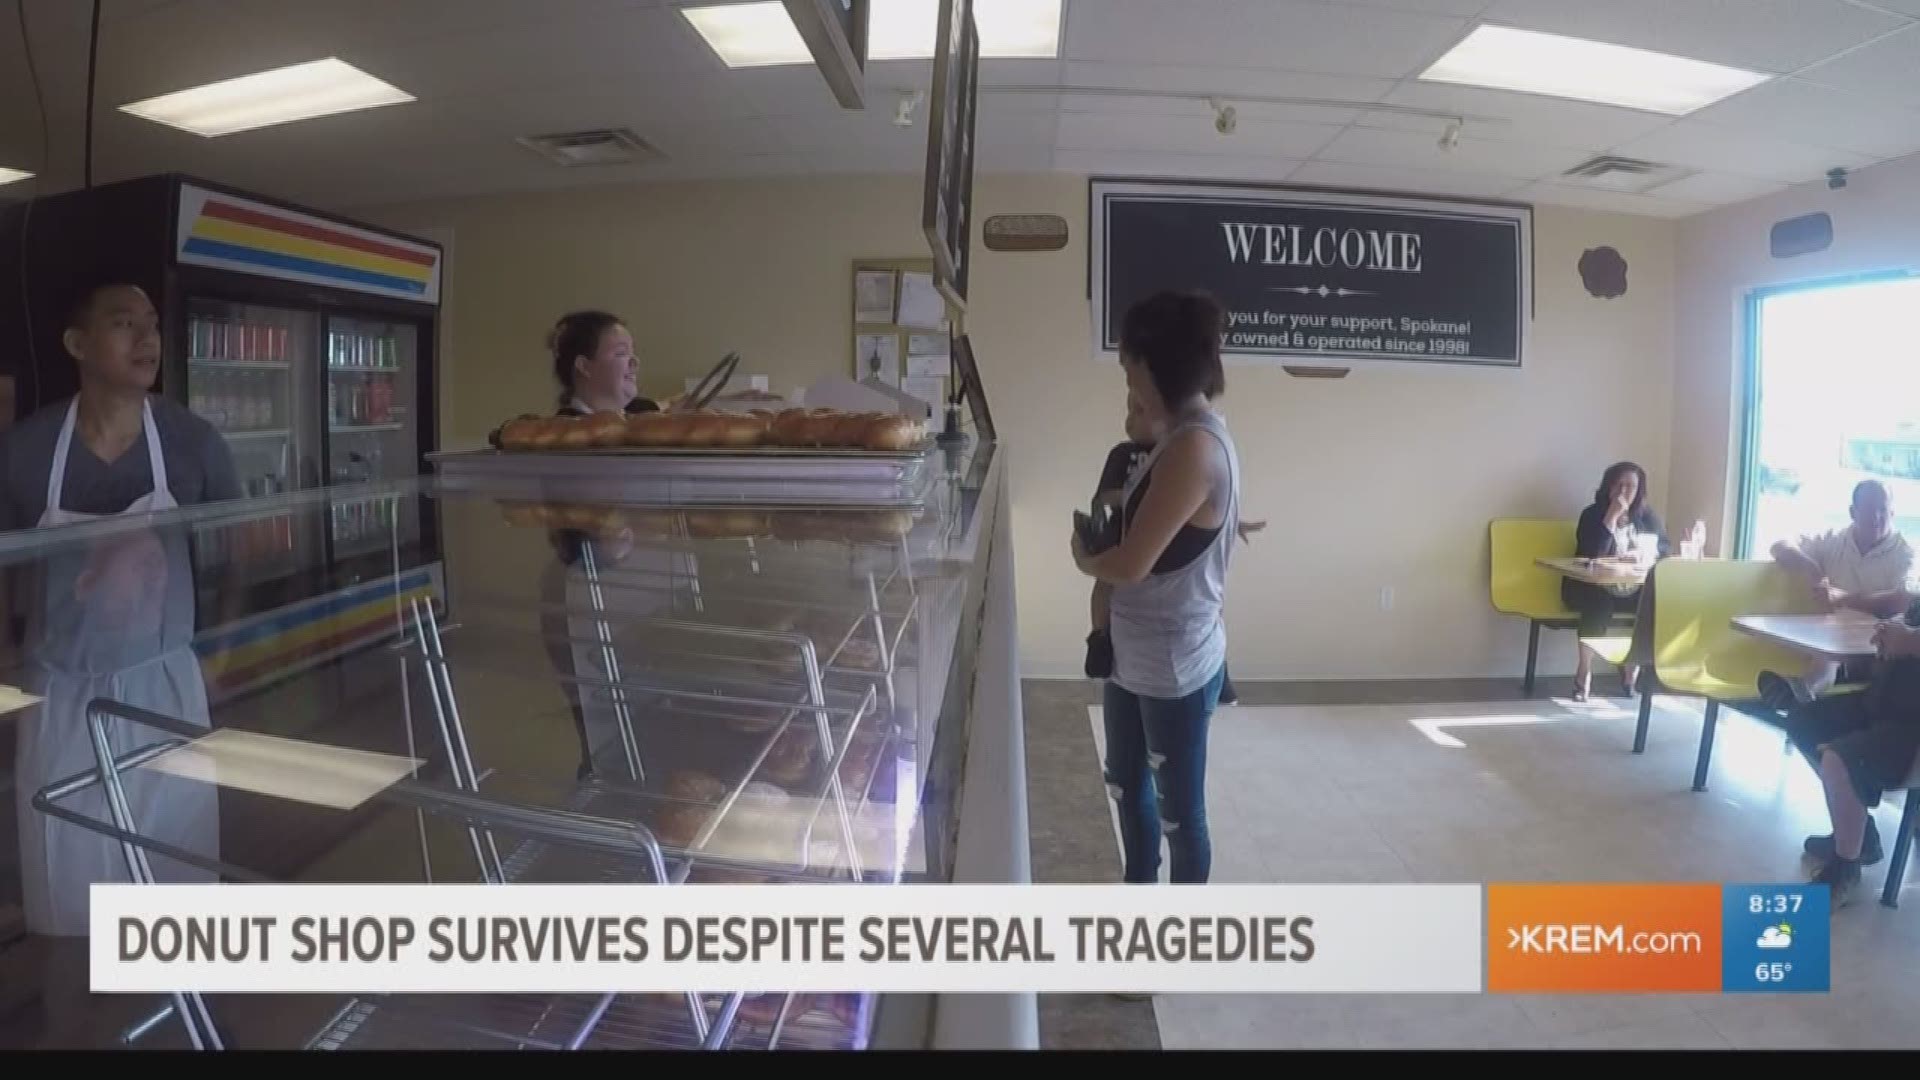 Spokane donut shop survives despite tragedy (8-16-18)